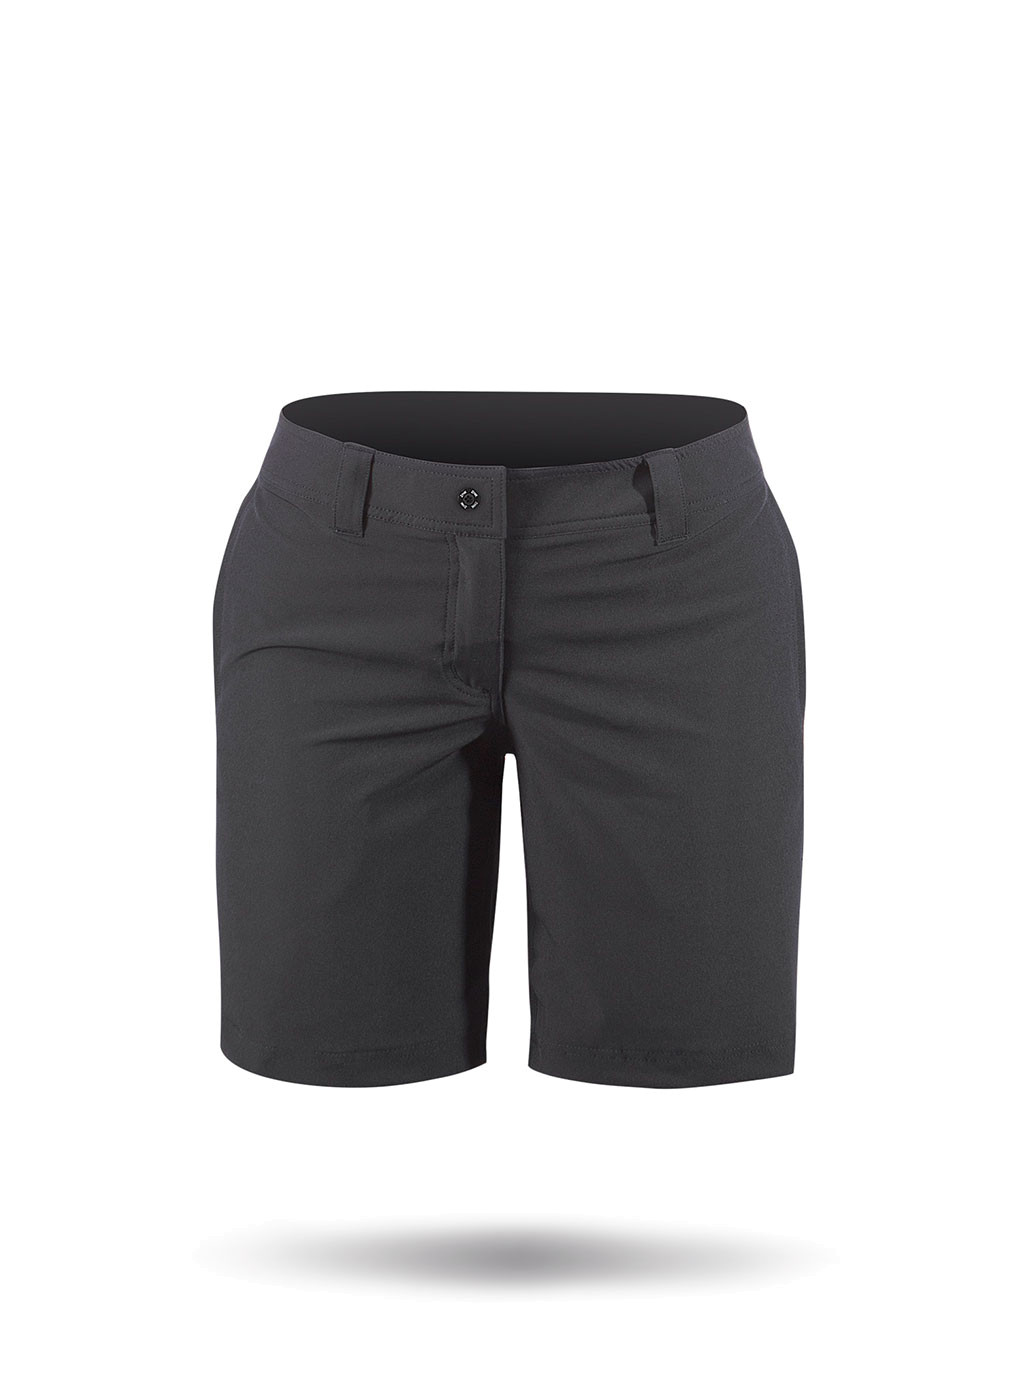 Shorts Zhik Marine shorts carbon